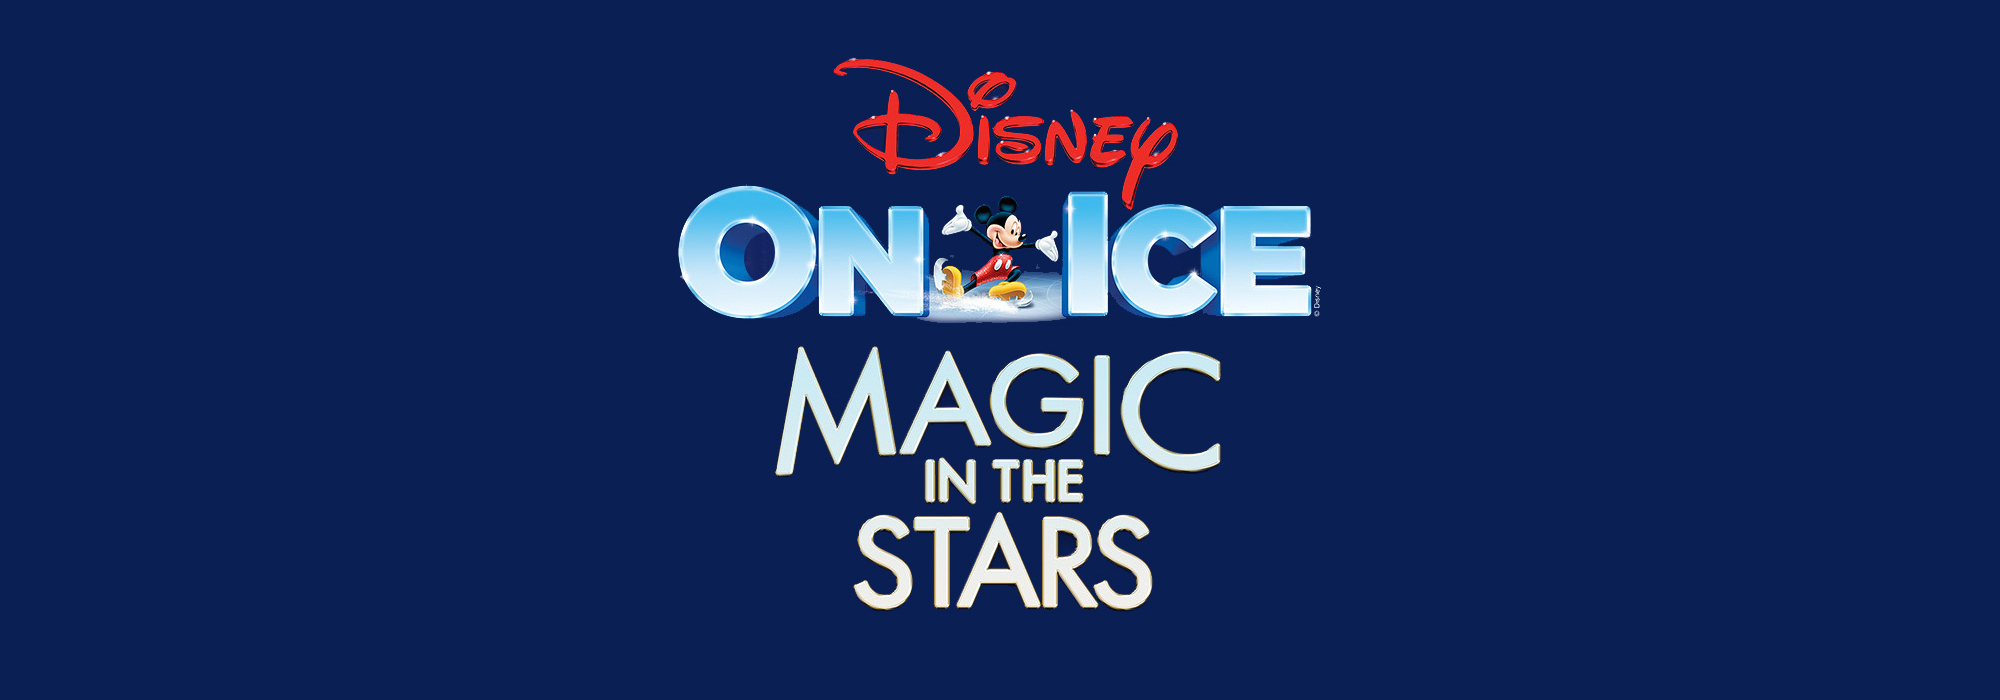 Disney On Ice presents Magic in the Stars Tickets Sunrise (FLA Live